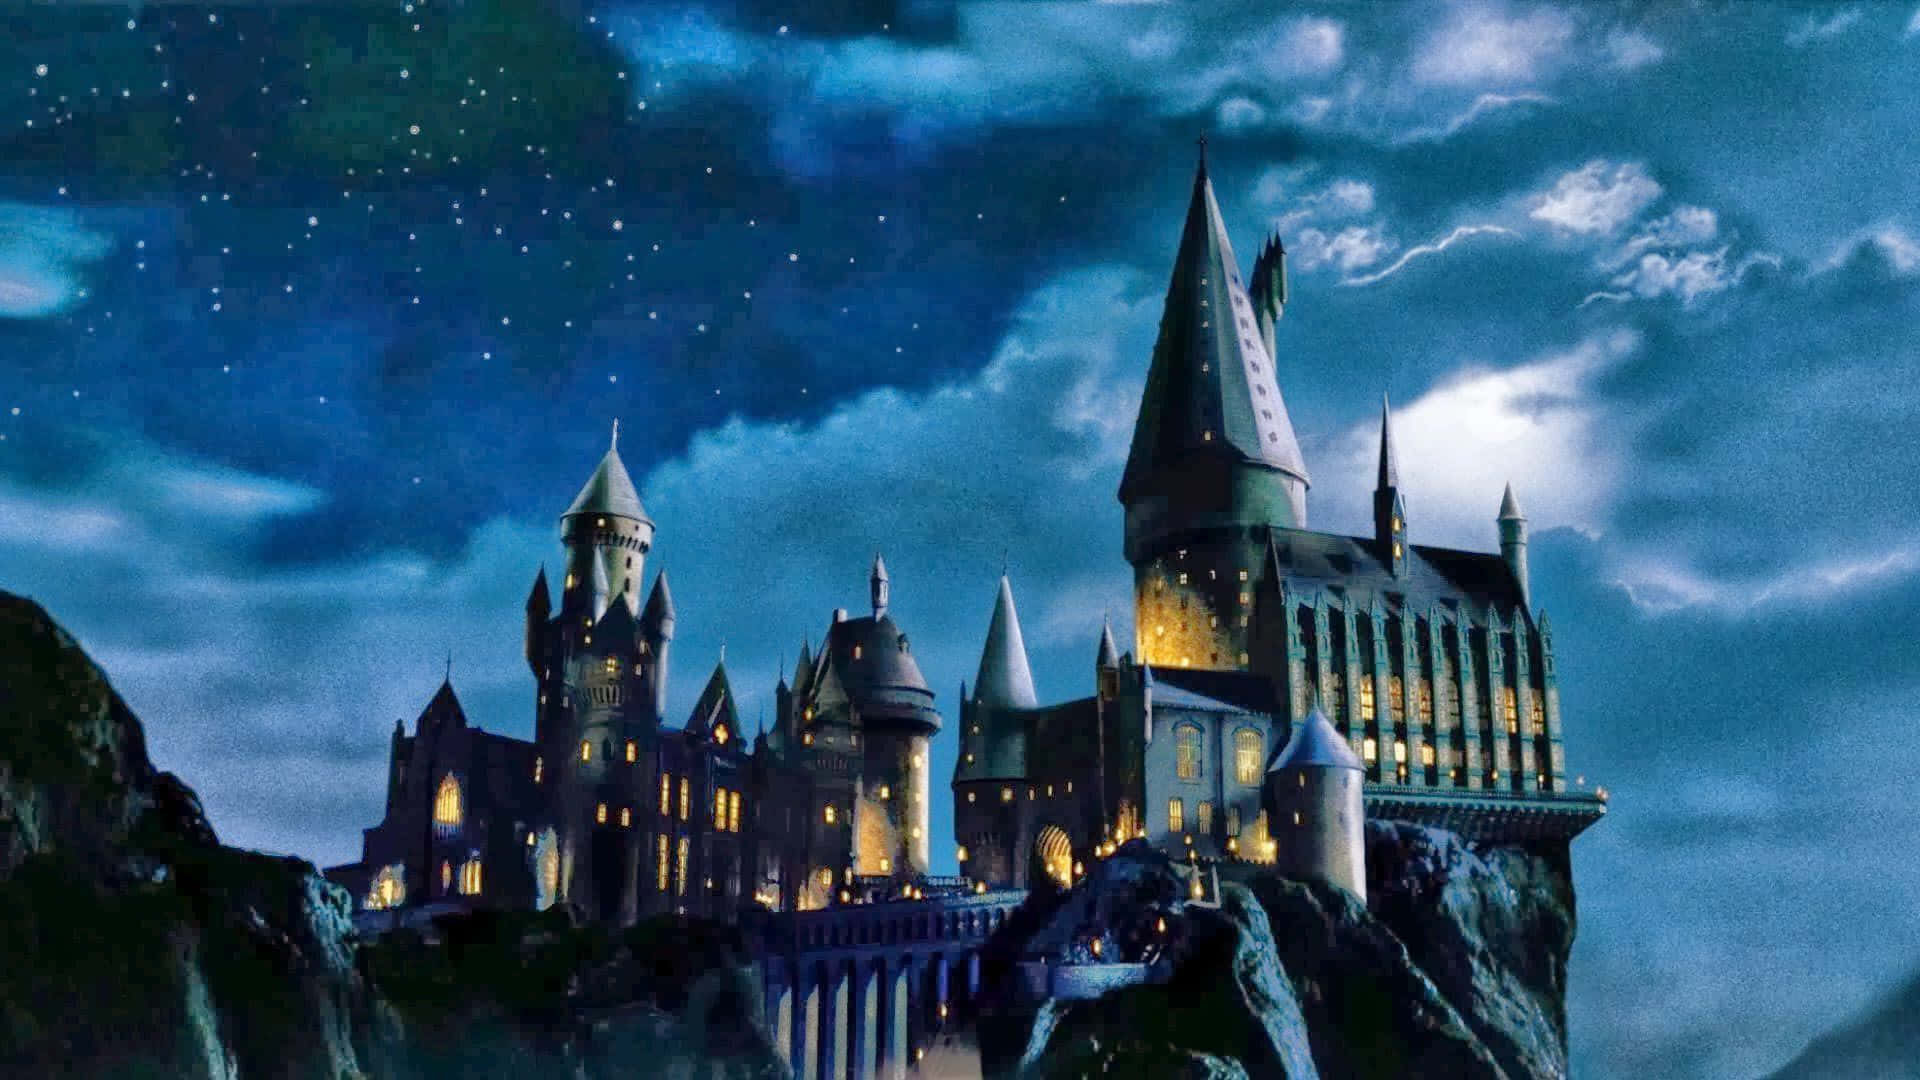 Hogwarts slot om natten med stjerner i himlen Wallpaper